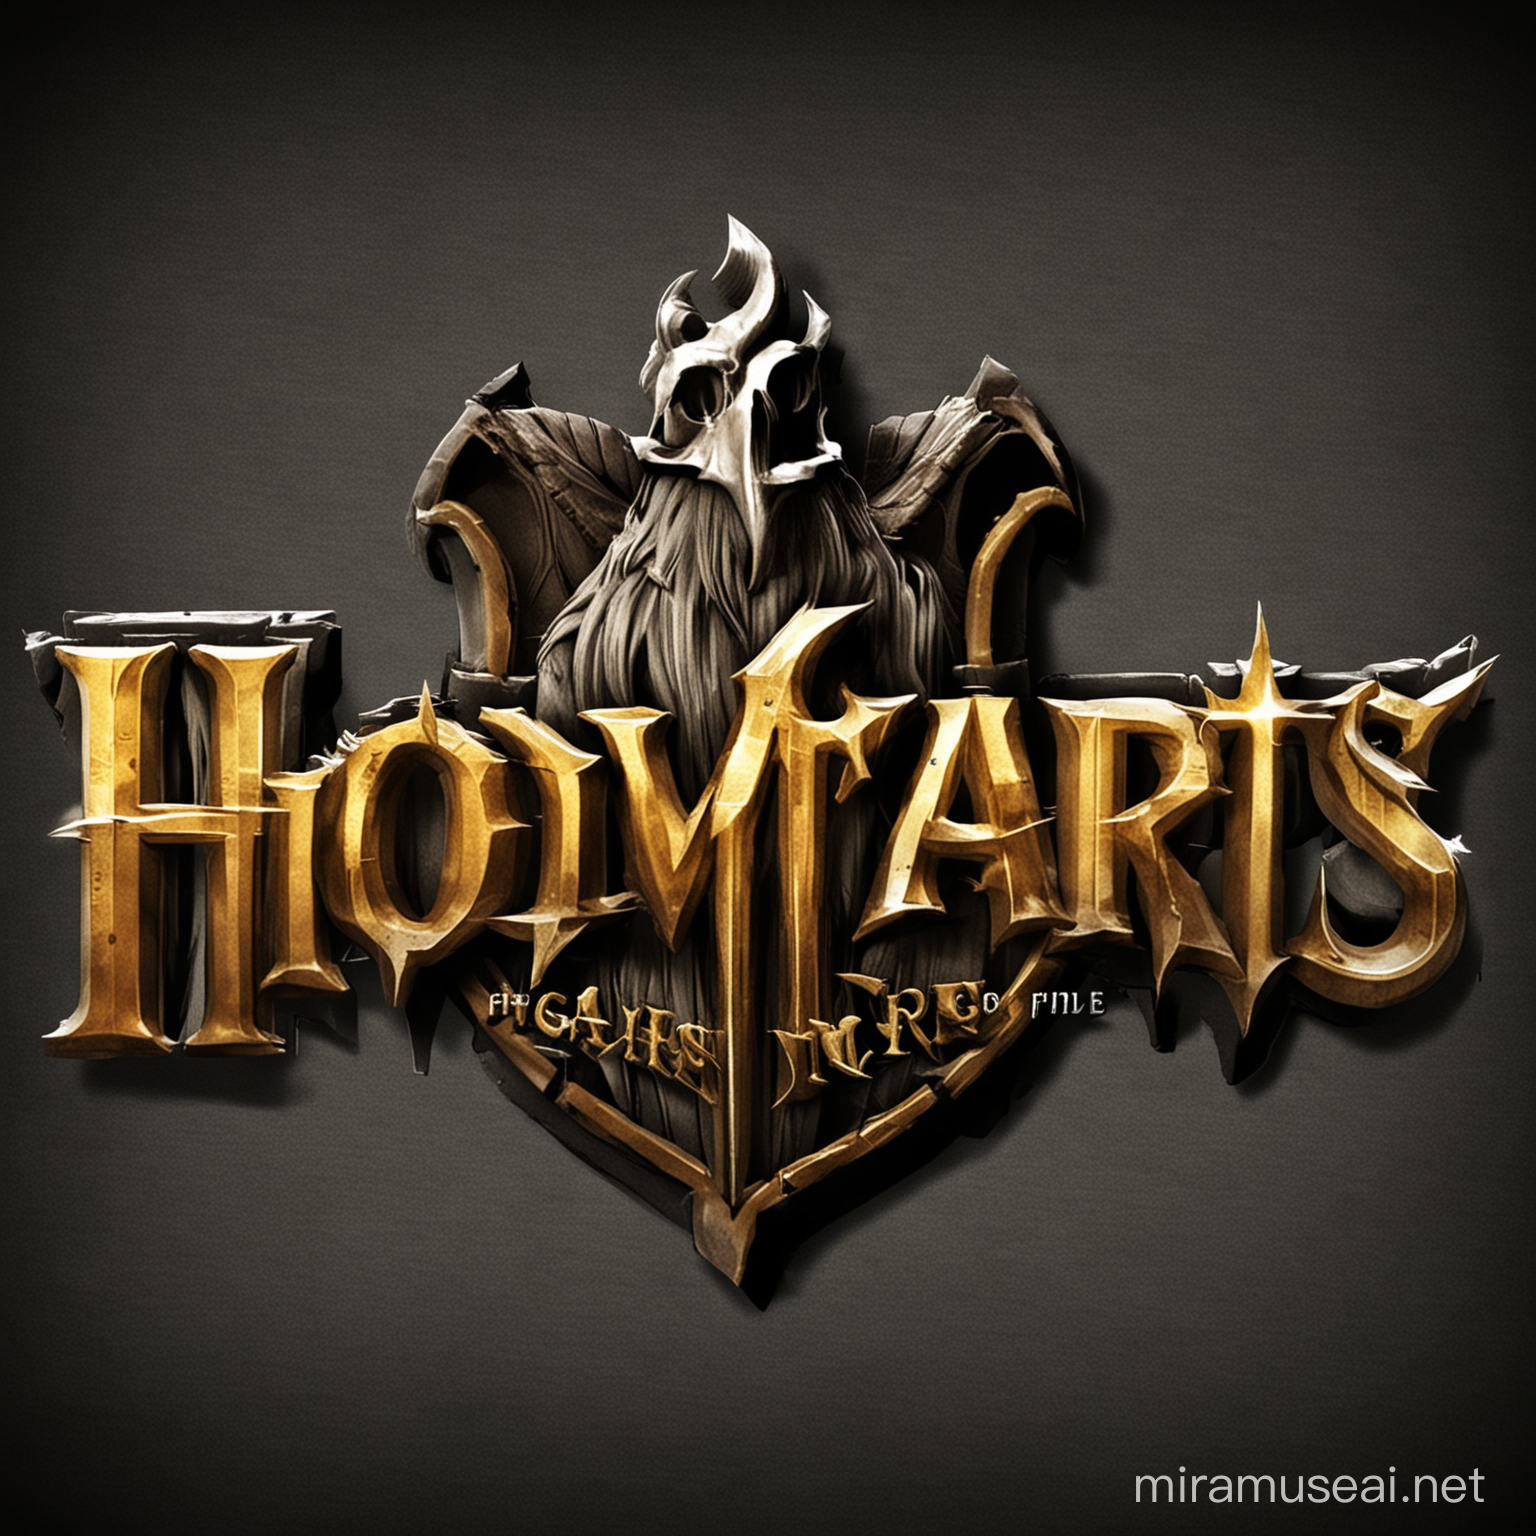 Magical Hogwarts Garrys Mod Roleplay Logo Design